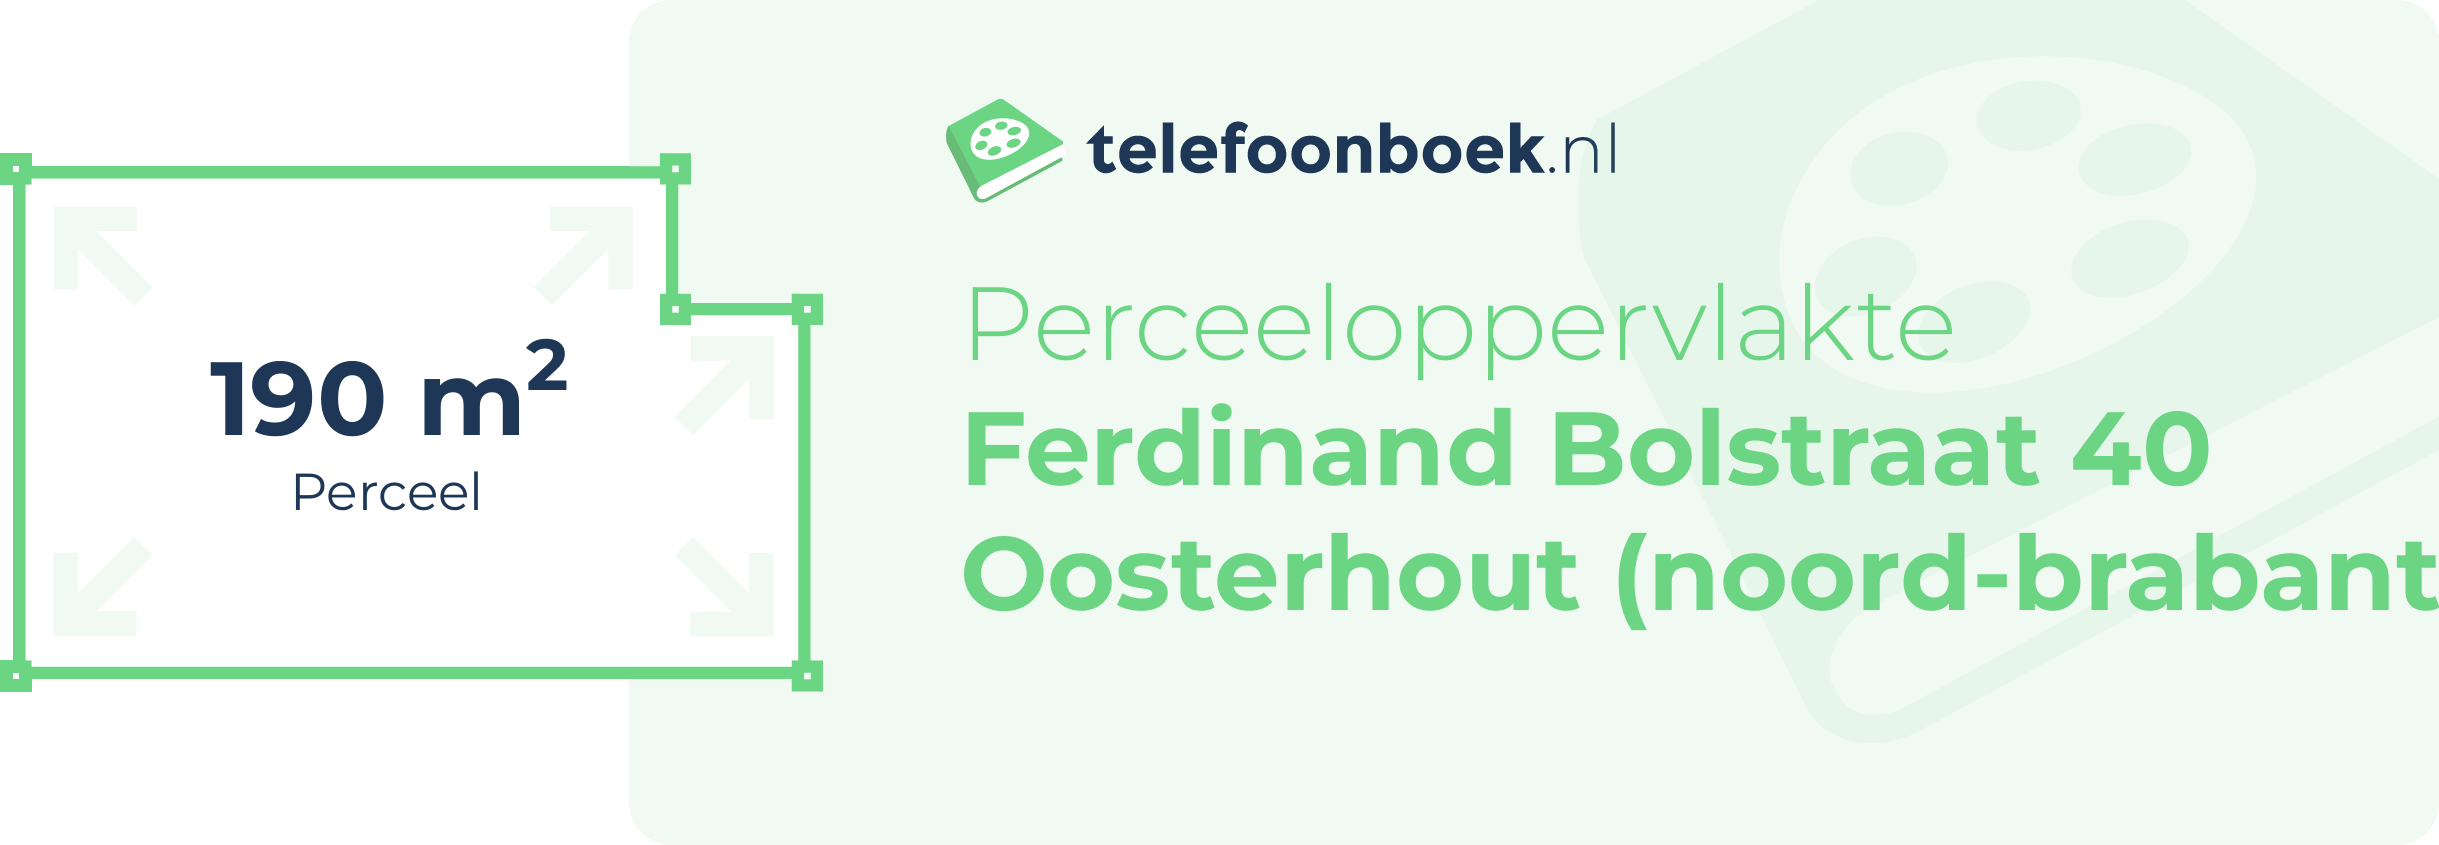 Perceeloppervlakte Ferdinand Bolstraat 40 Oosterhout (Noord-Brabant)